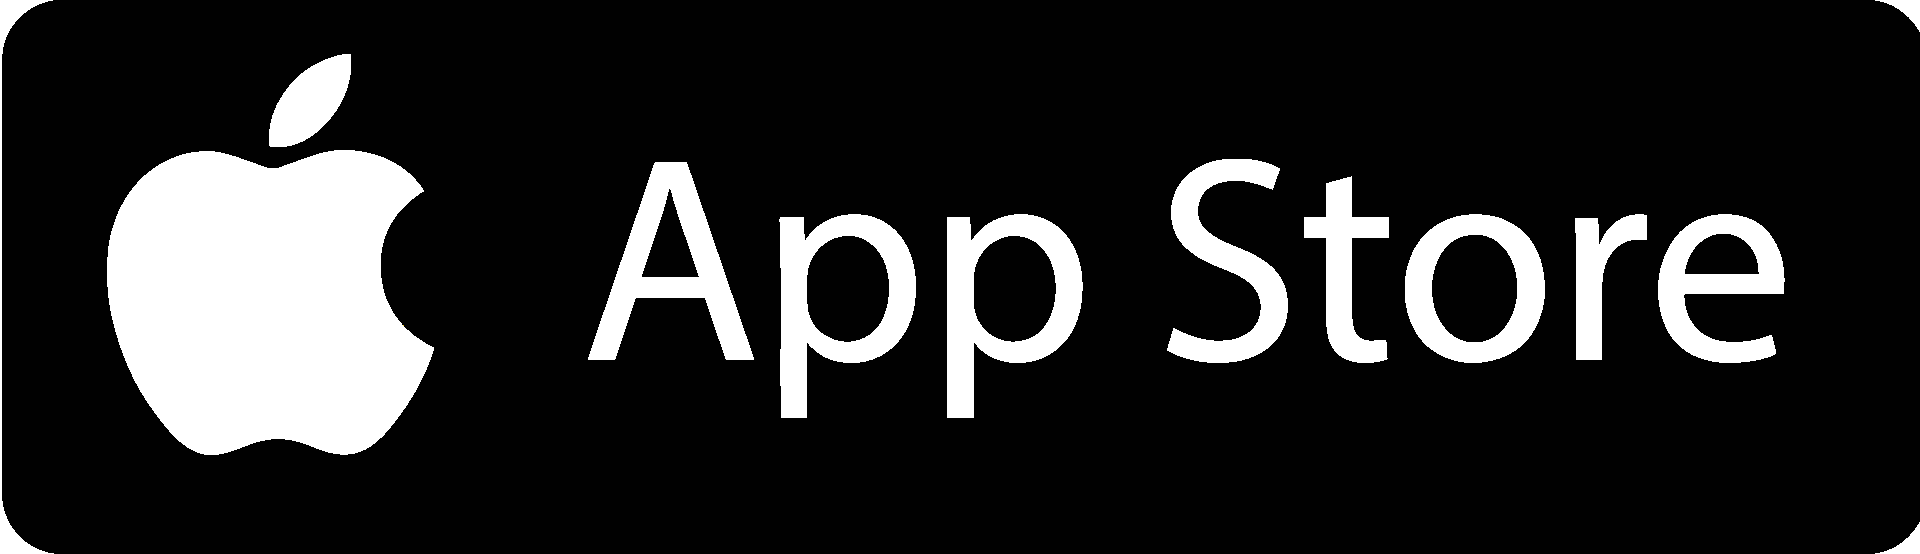 logo app store 01